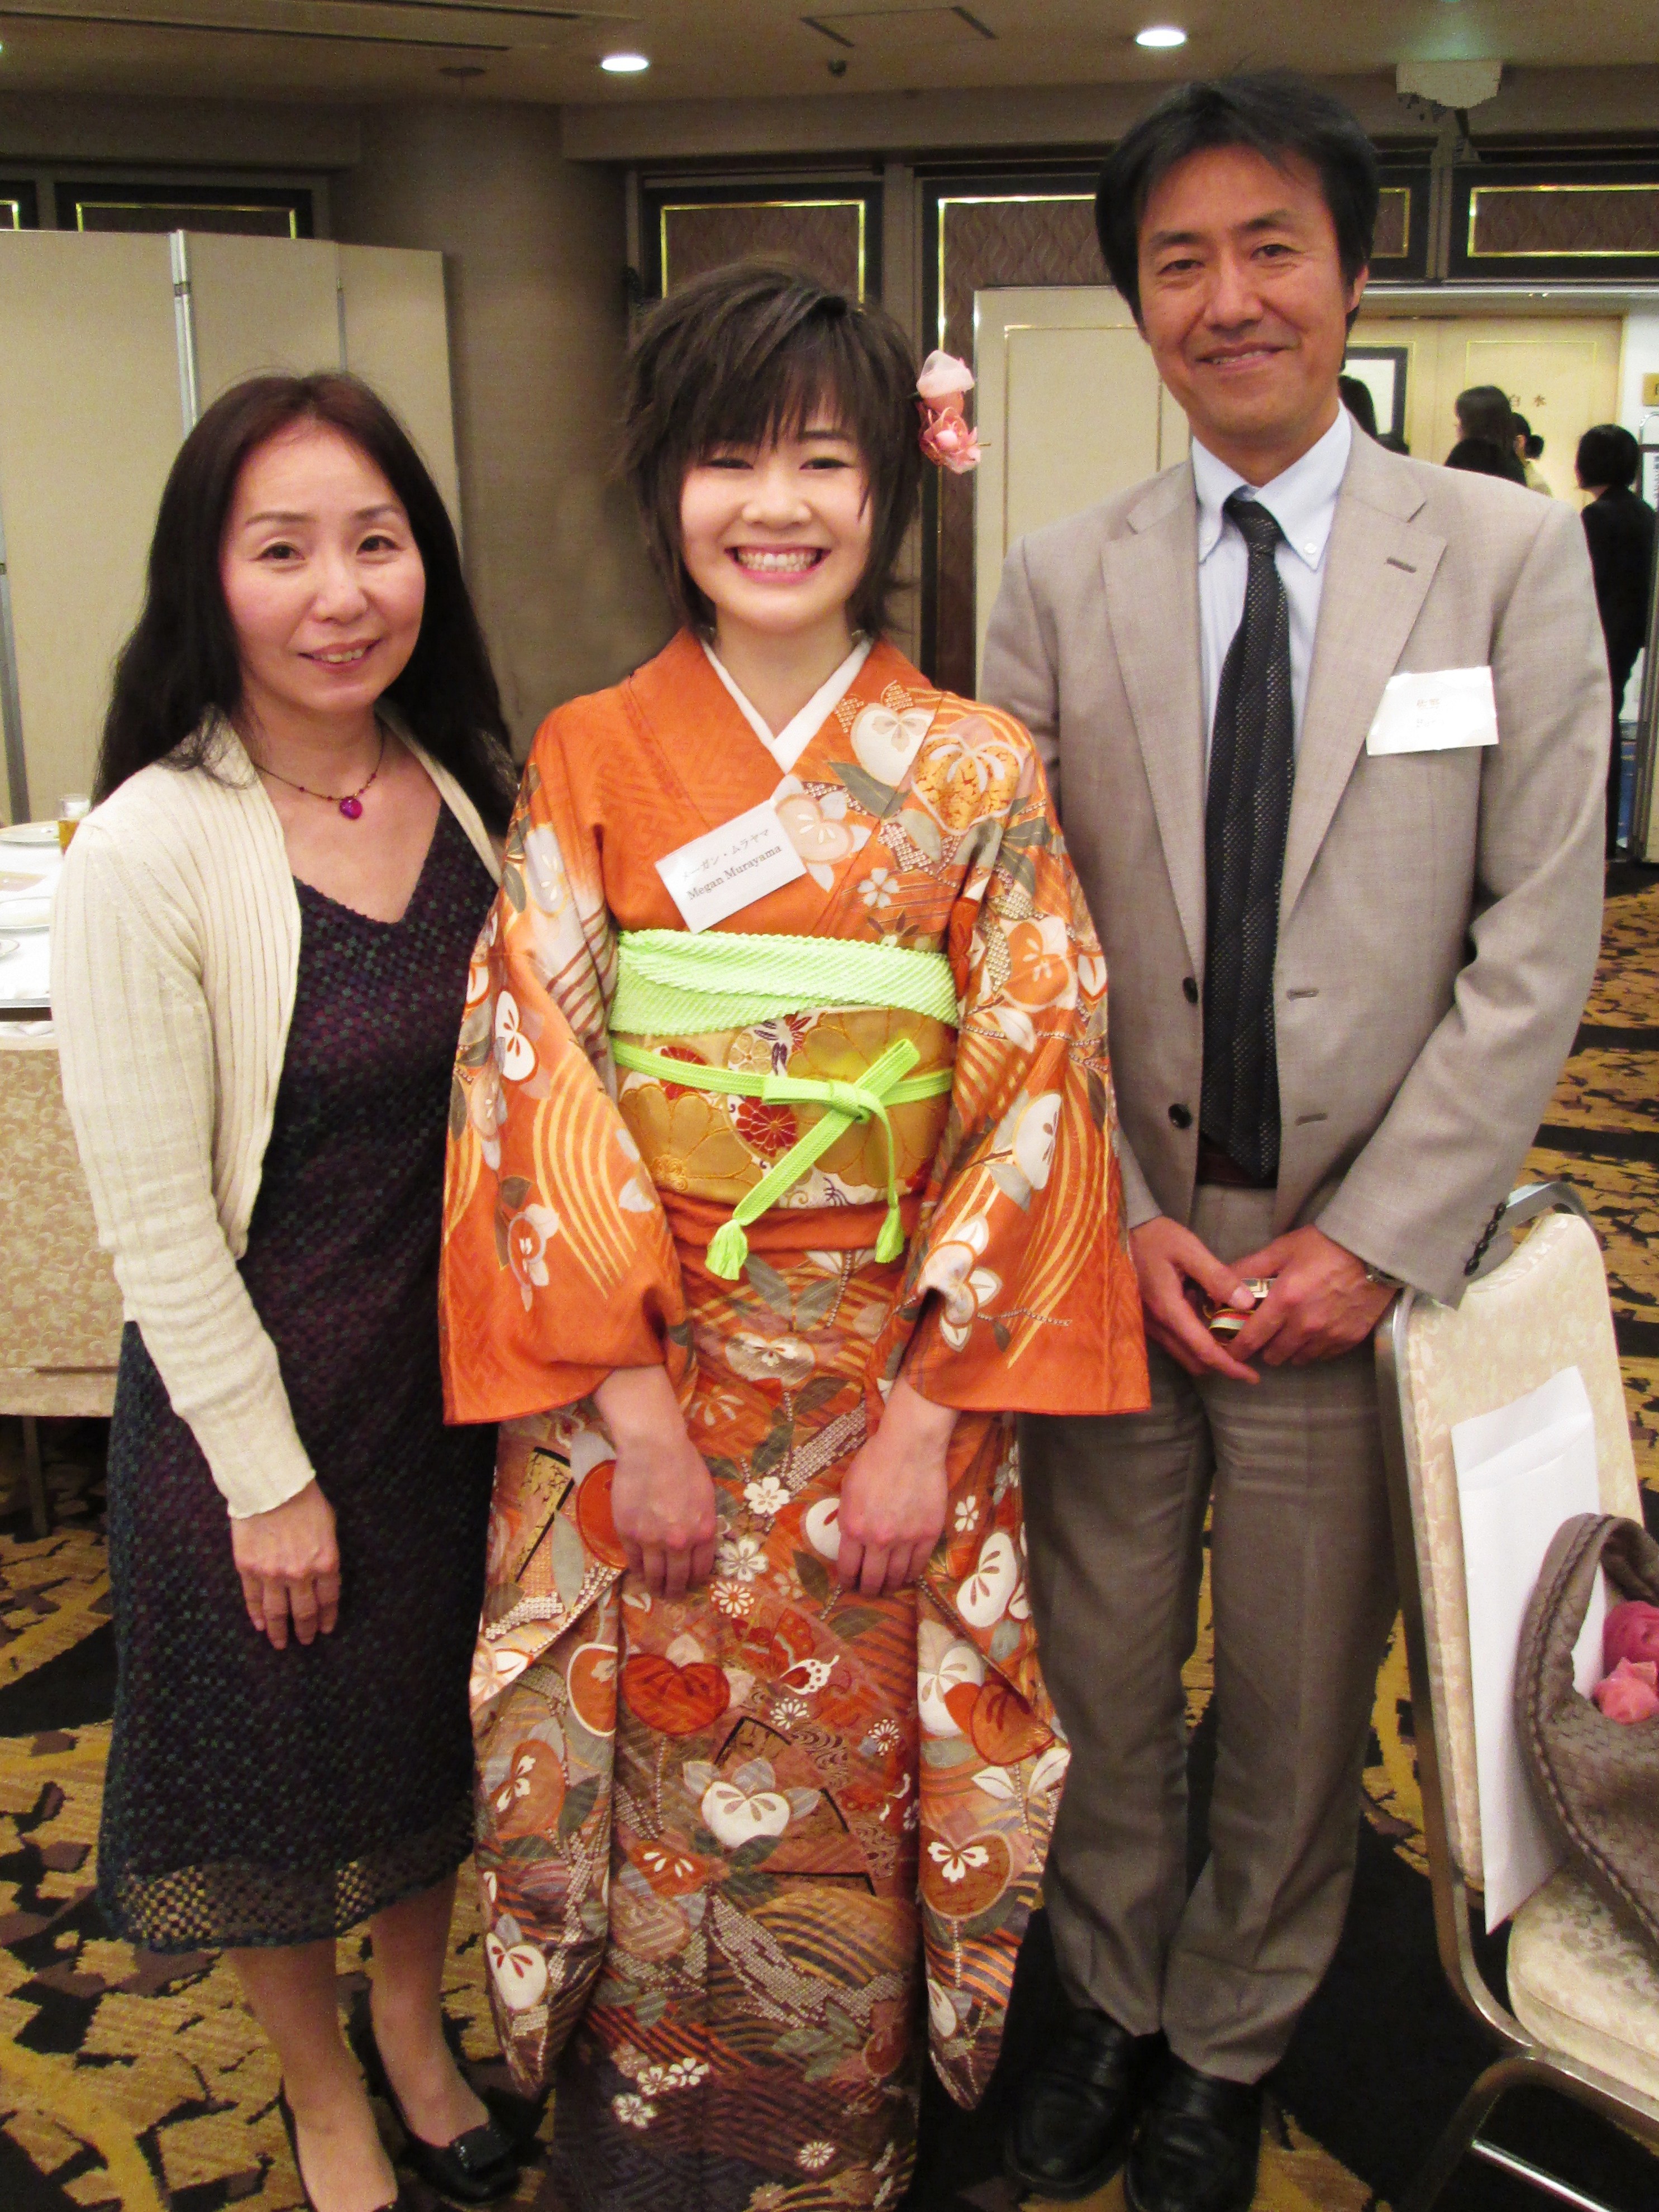 Murayama with her host family, the Sanos